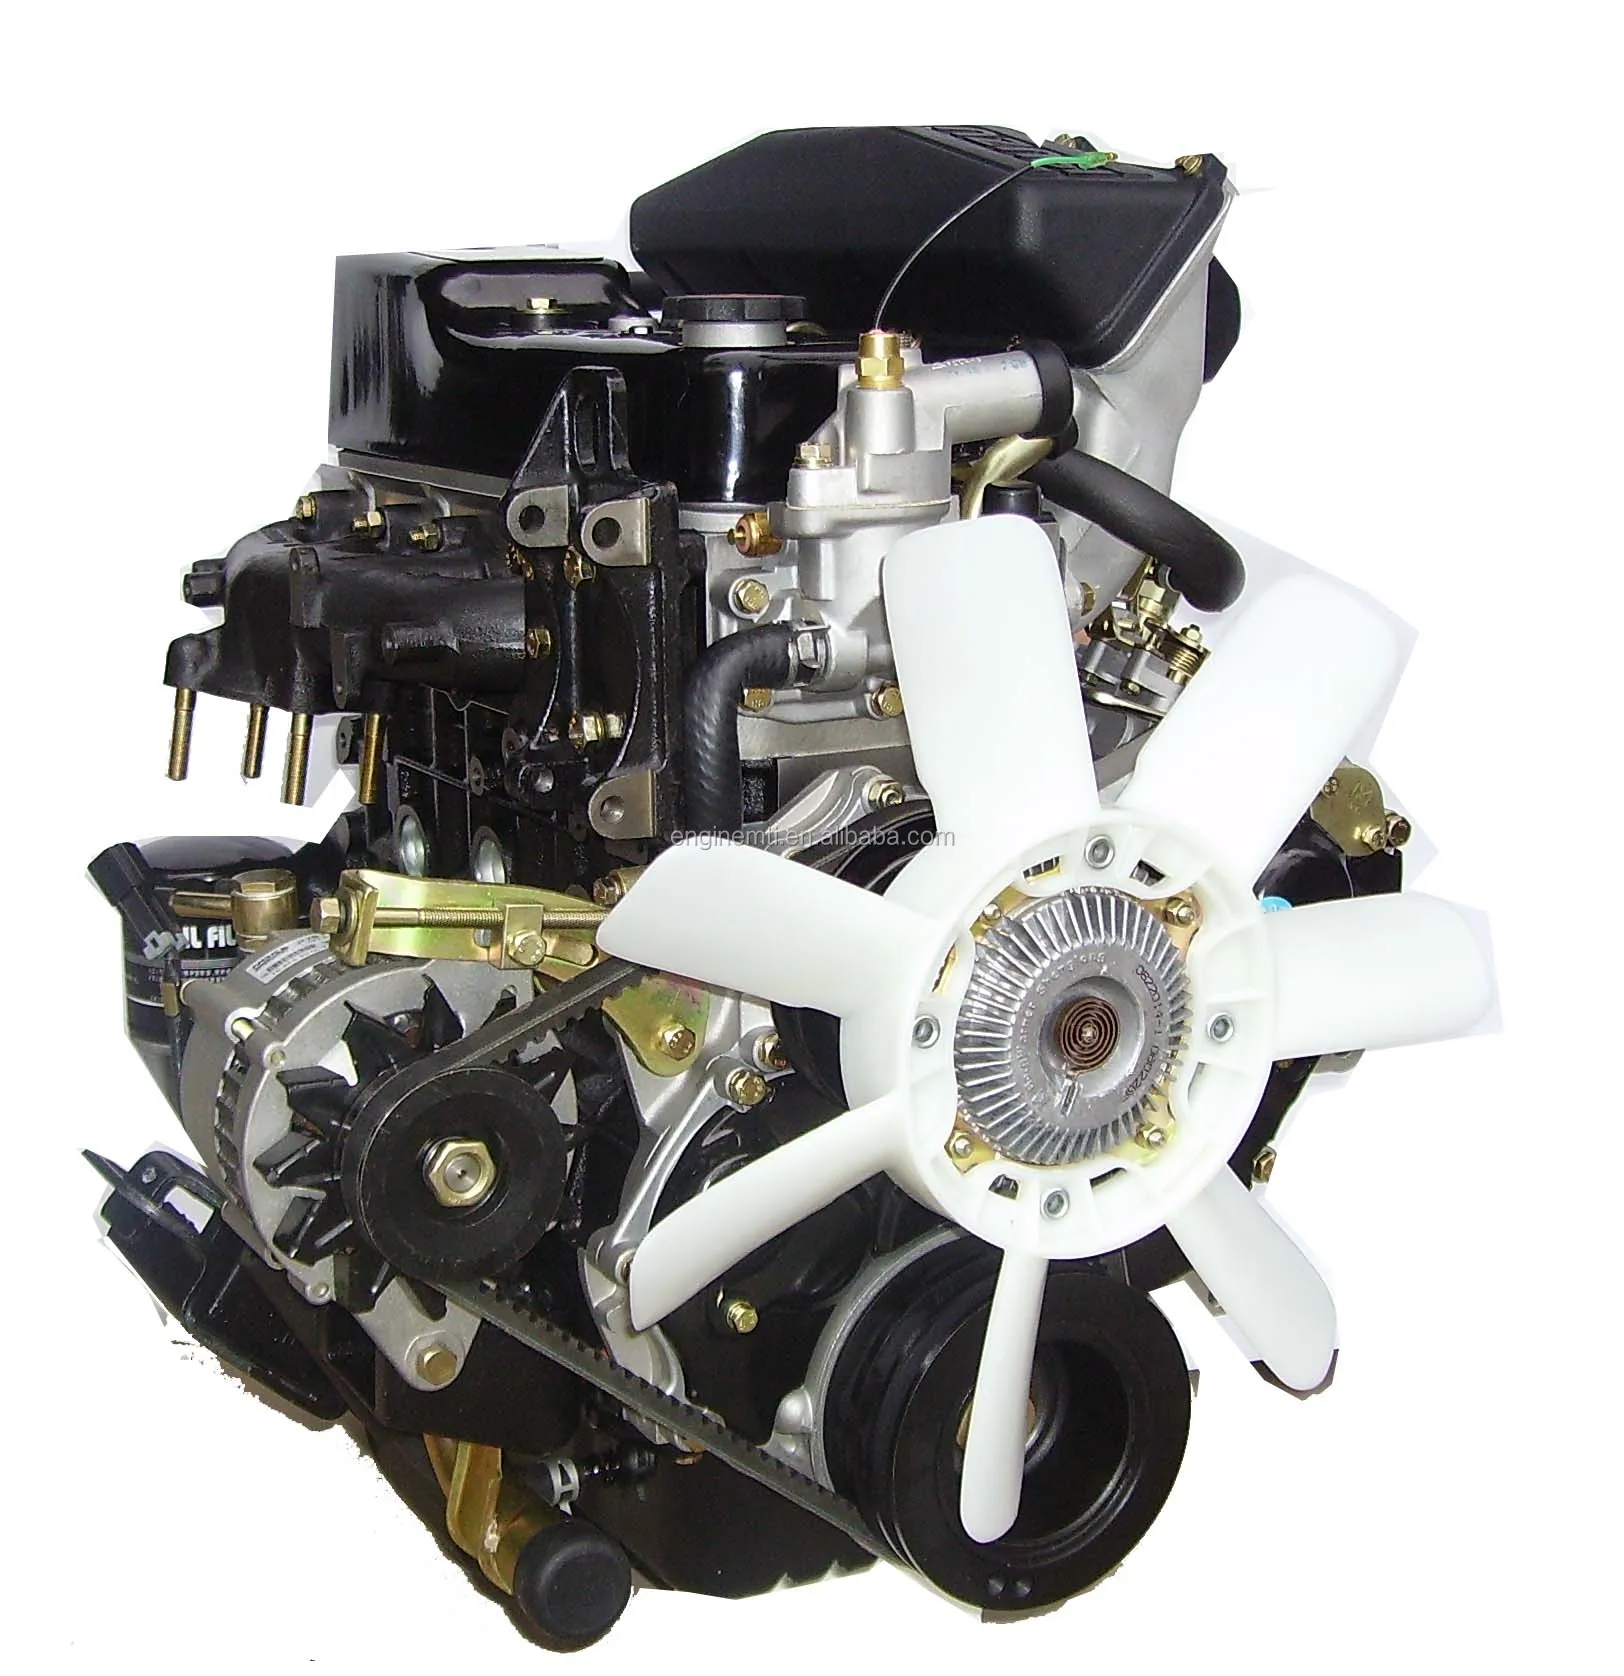 Top Performance Complete Engine ISUZU 4JB1/T| Alibaba.com